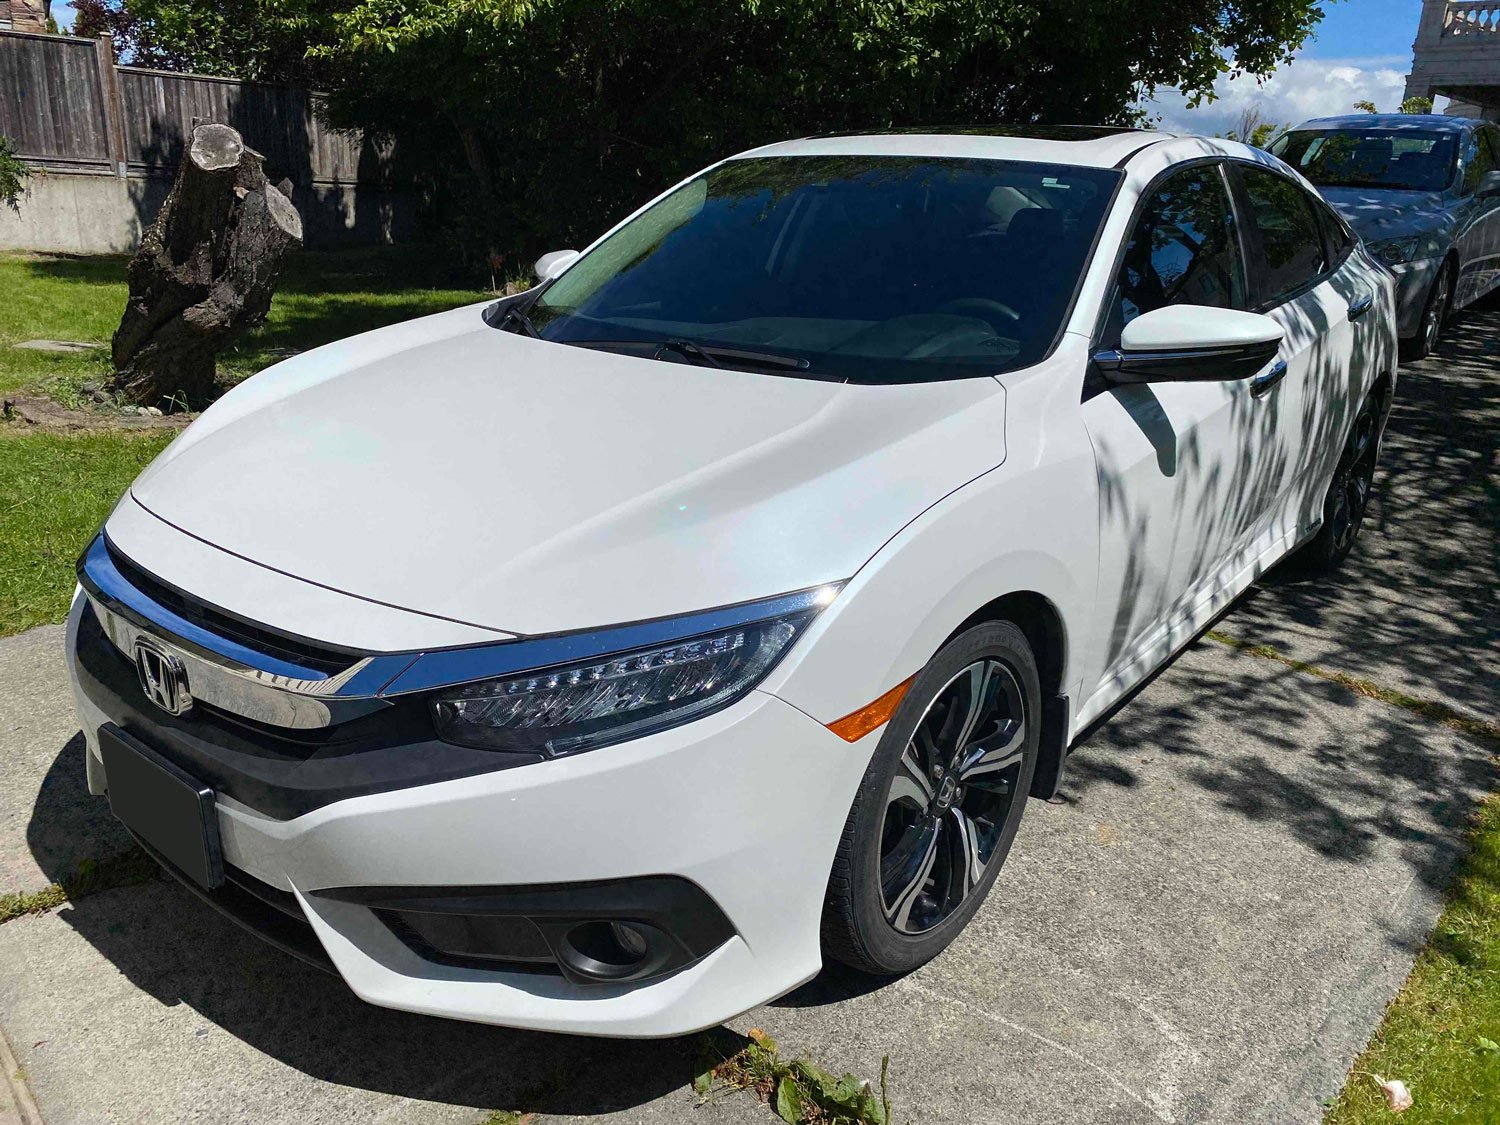 2018-Honda-Civic-Touring-4D-Sedan-may-2022